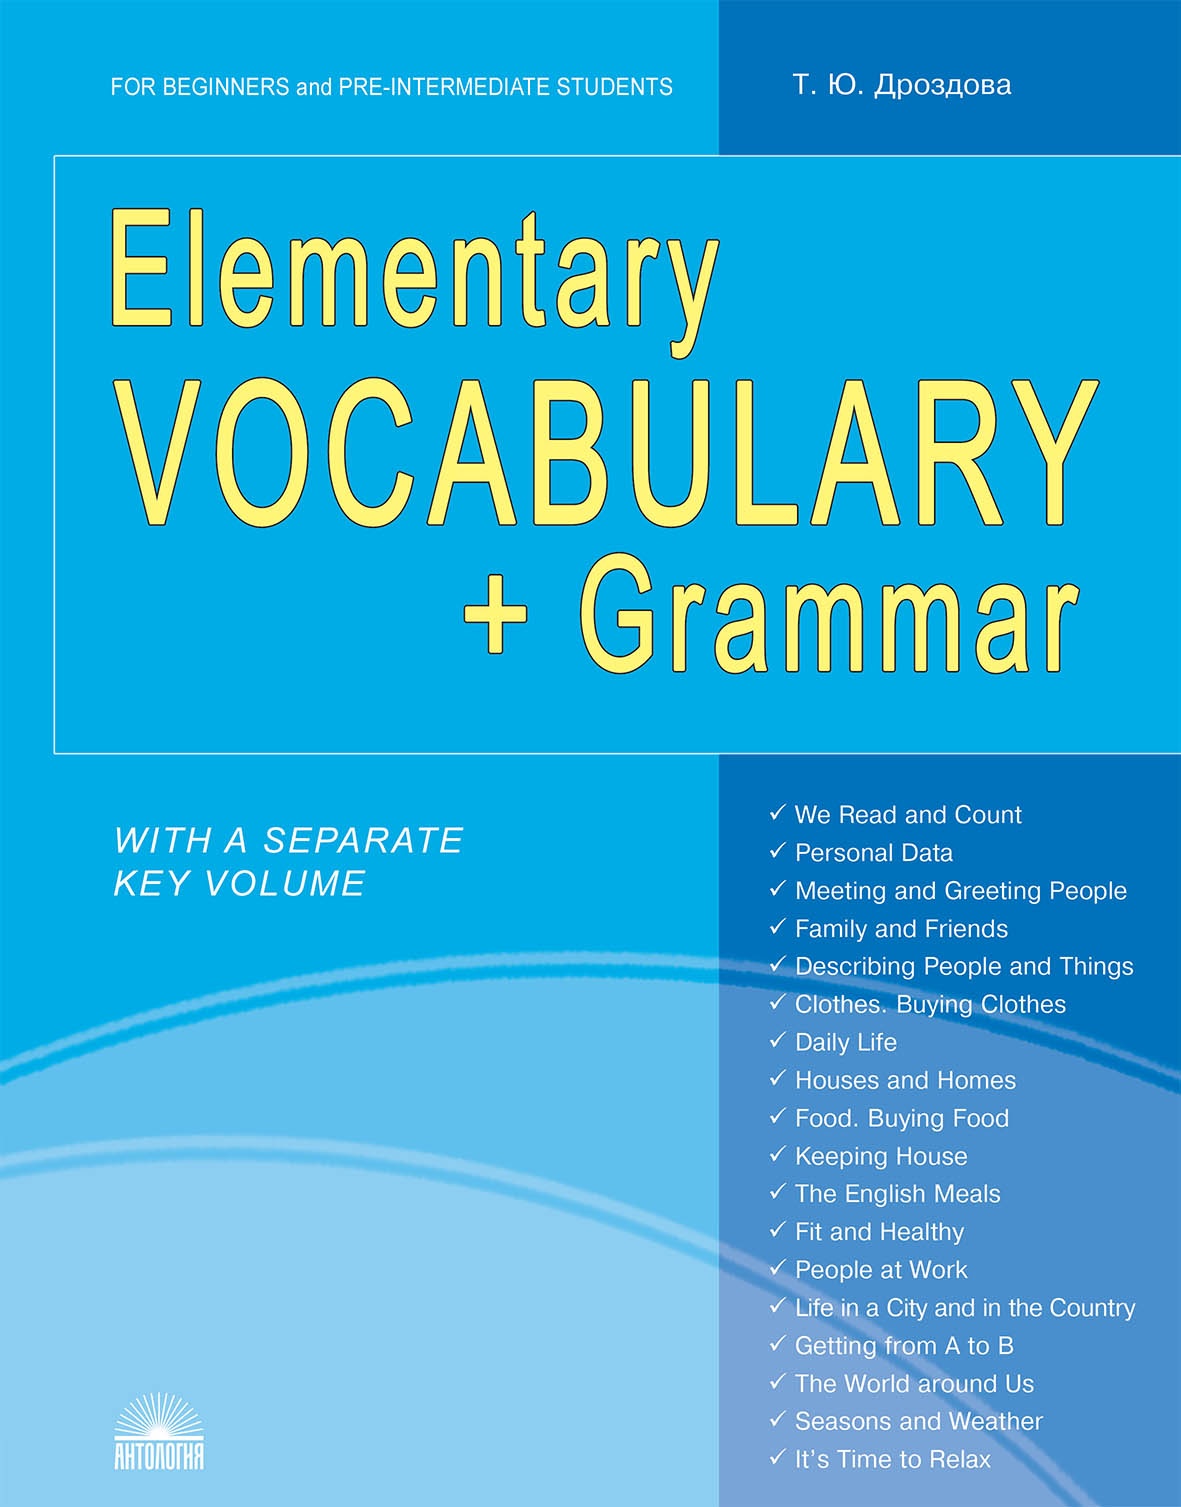 Elementary Vocabulary + Grammar (Основной лексикон + грамматика)